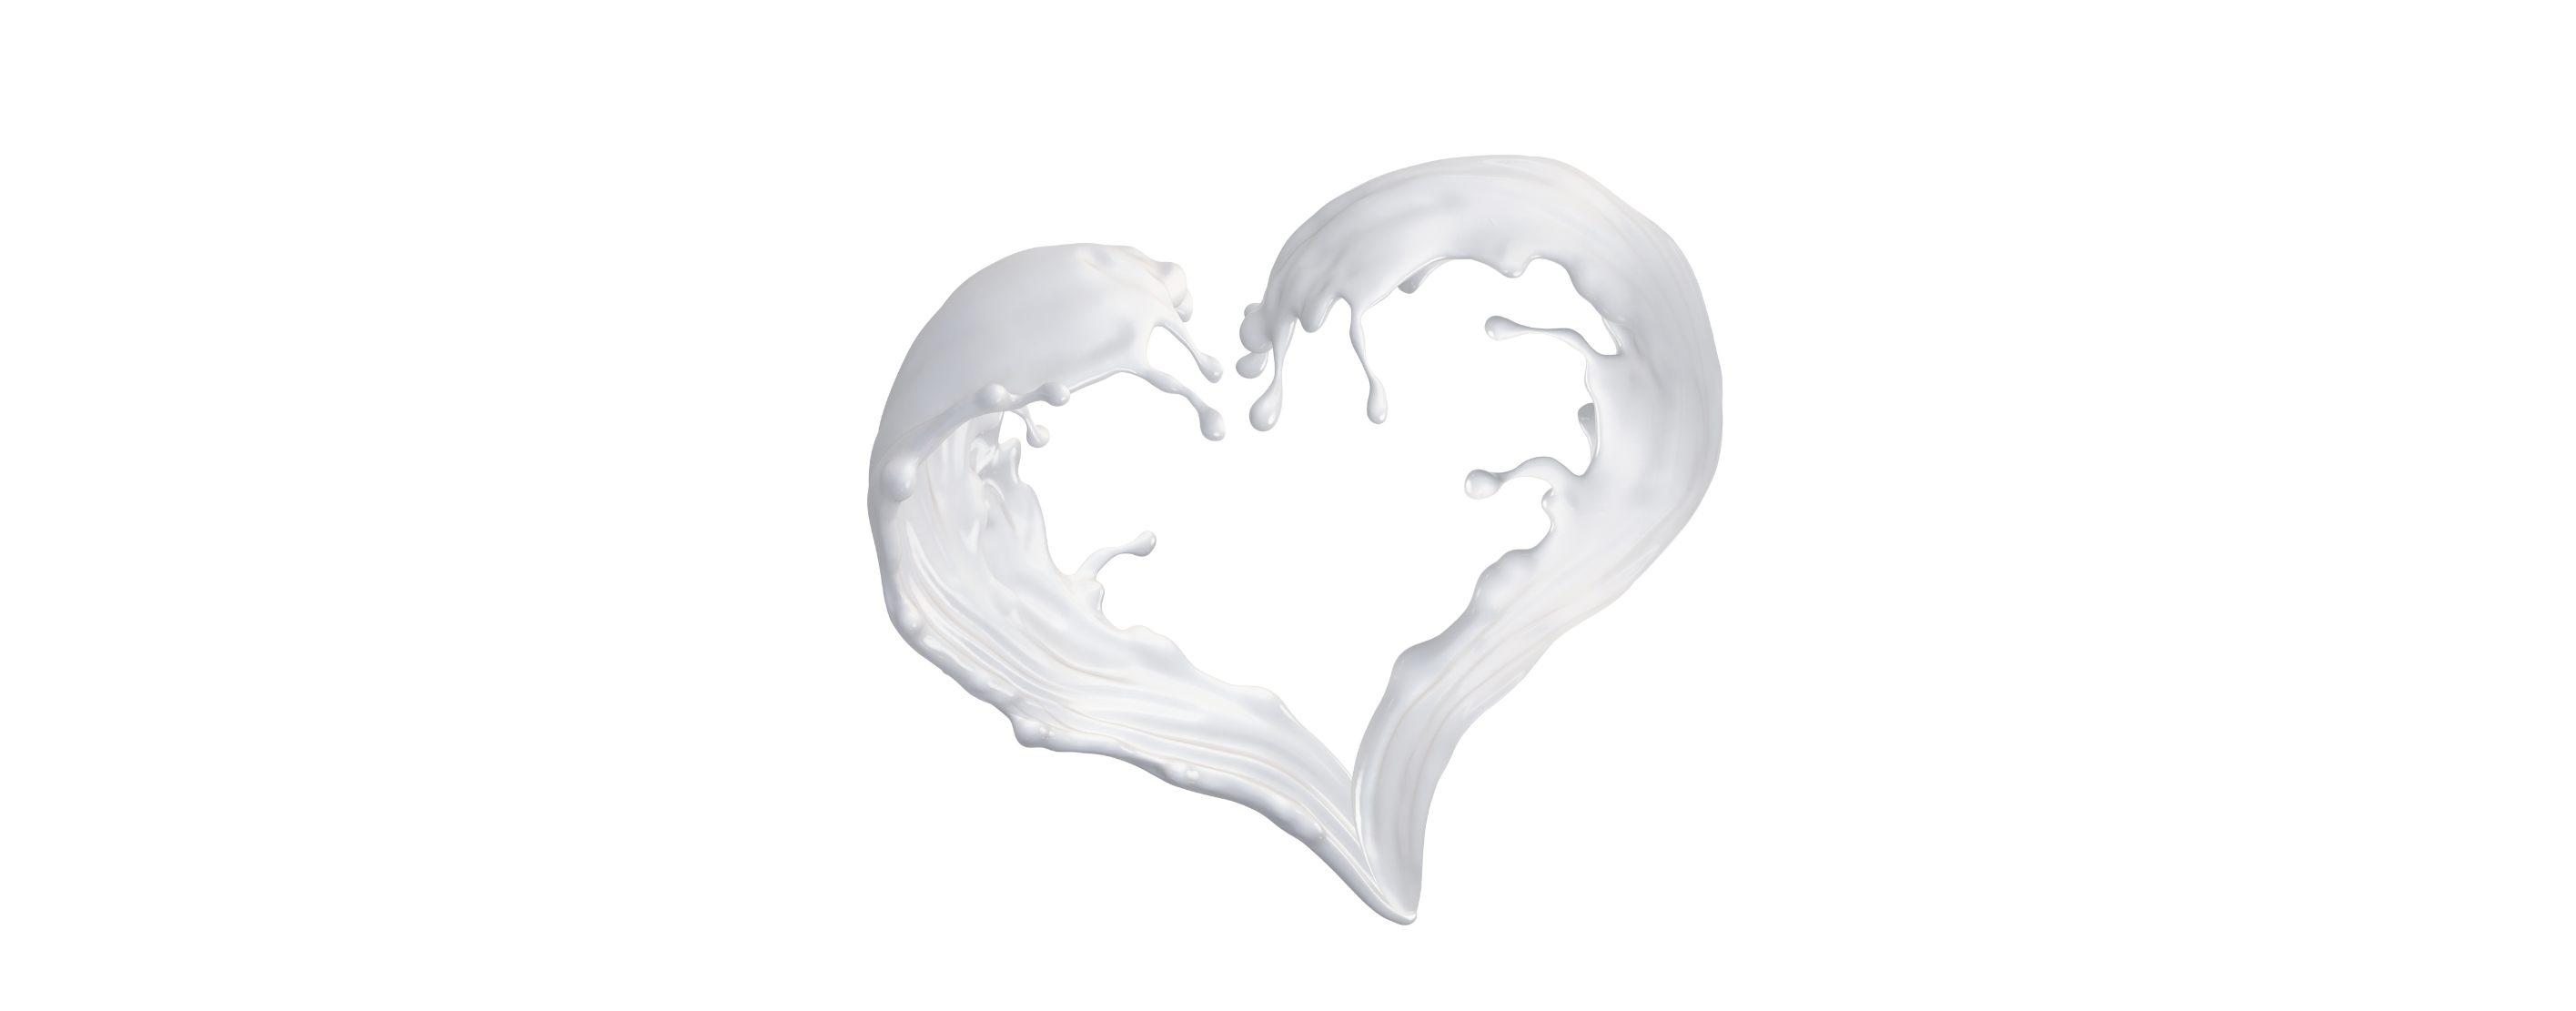 A heart made of a splash of milk